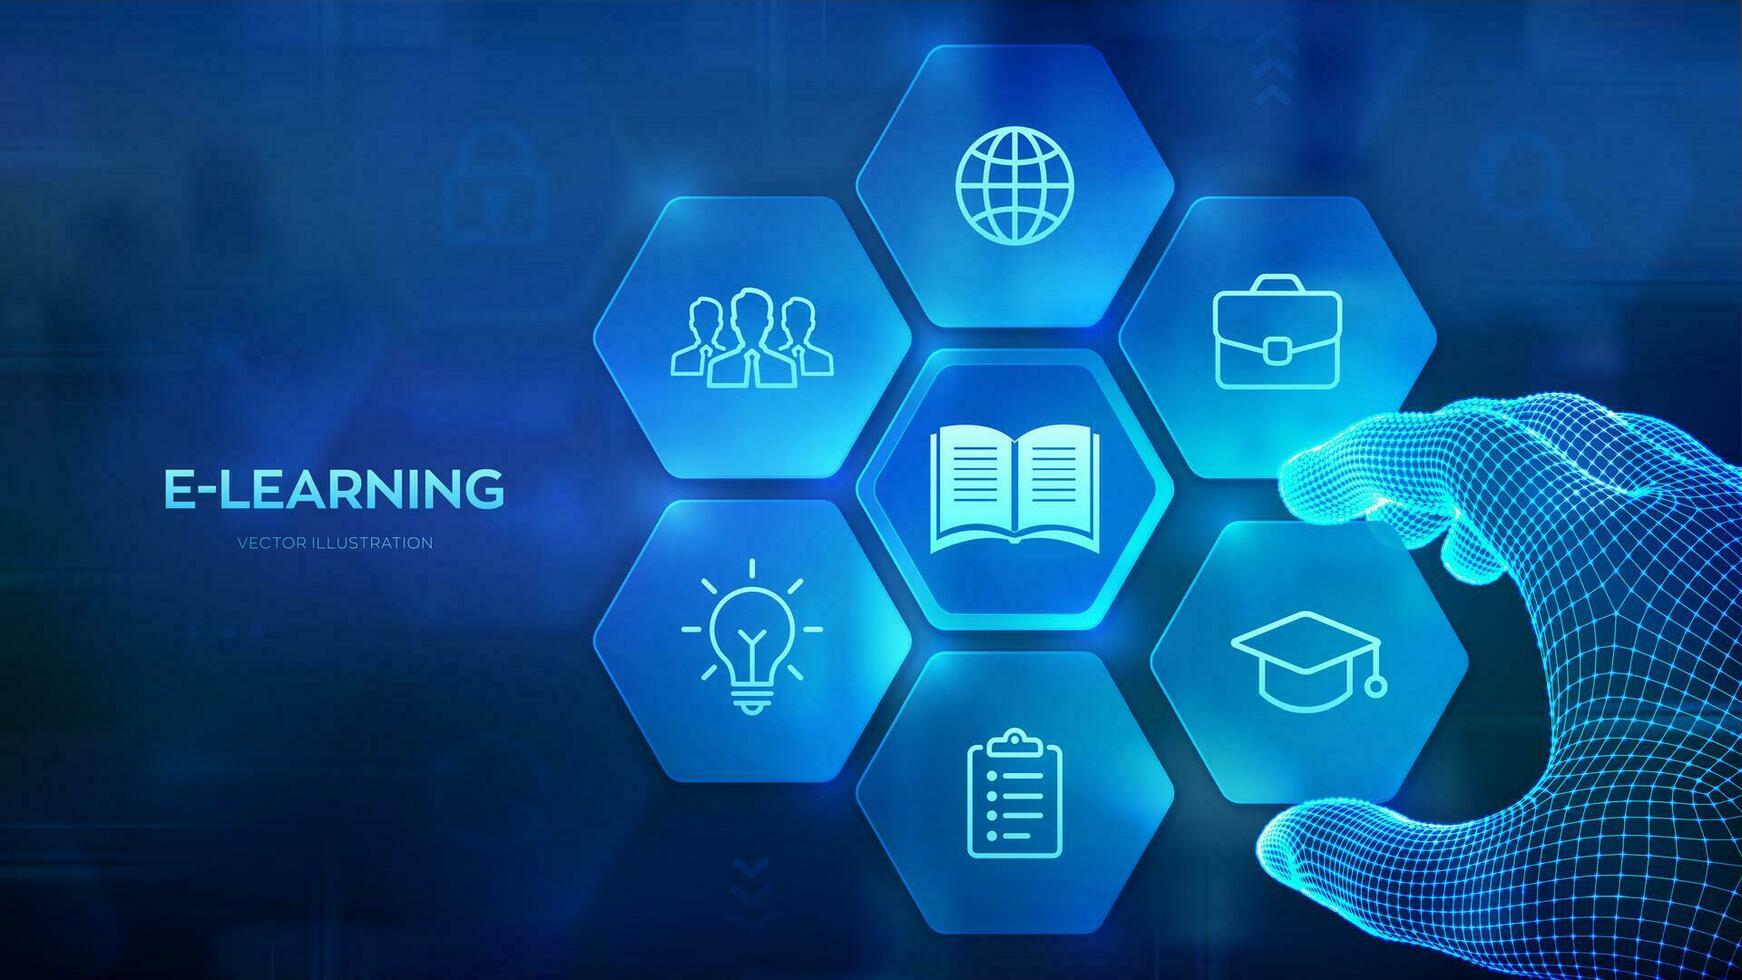 edutechfy is an e-learning and edtech media platform